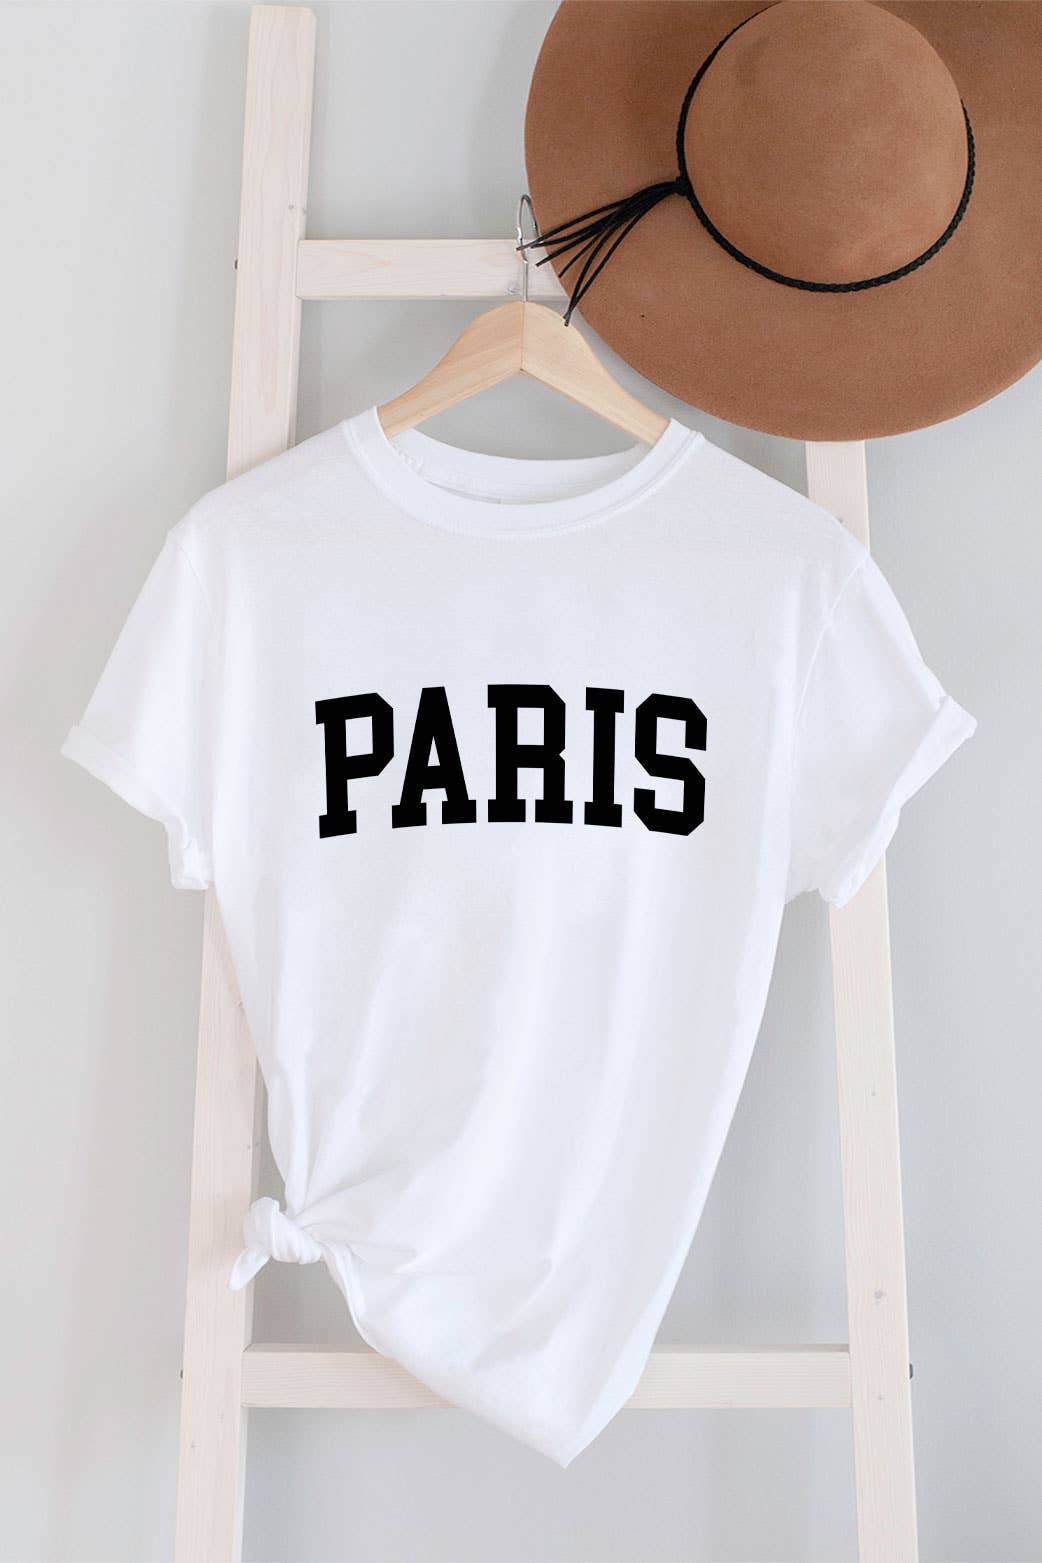 Paris, Unisex Round Neck Short Sleeve T-Shirt: L / H Grey/Black